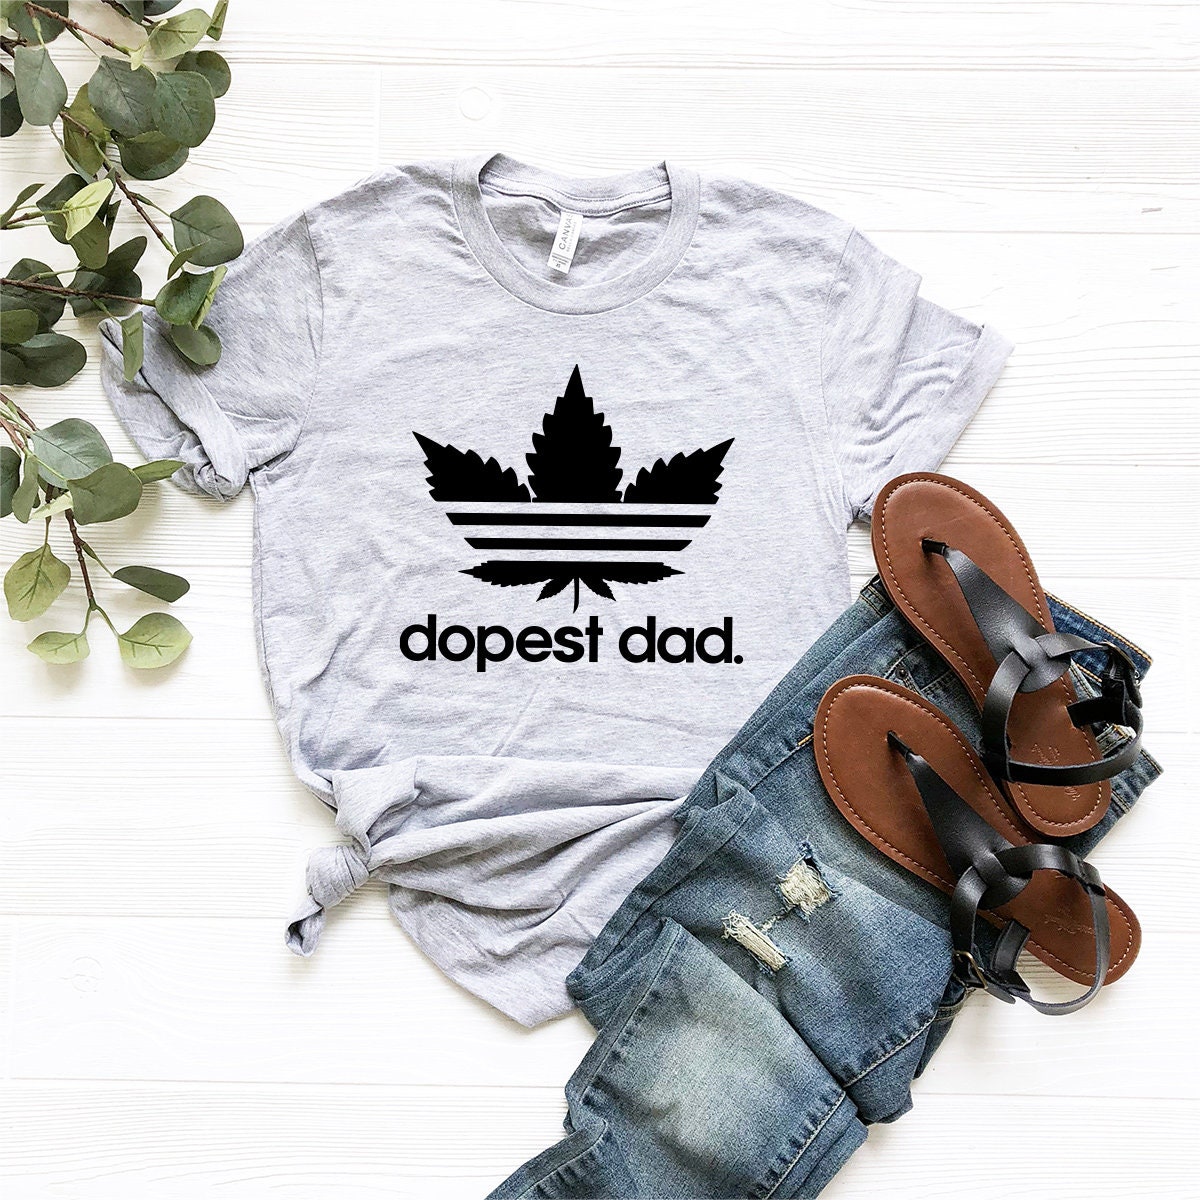 Weed Shirt, Dopest Dad Shirt, Cannabis Shirt, Marijuana Shirt, Funny Weed Shirt,  Weed Gift, Weed Dad Shirt, 420-Weed Shirt - Fastdeliverytees.com